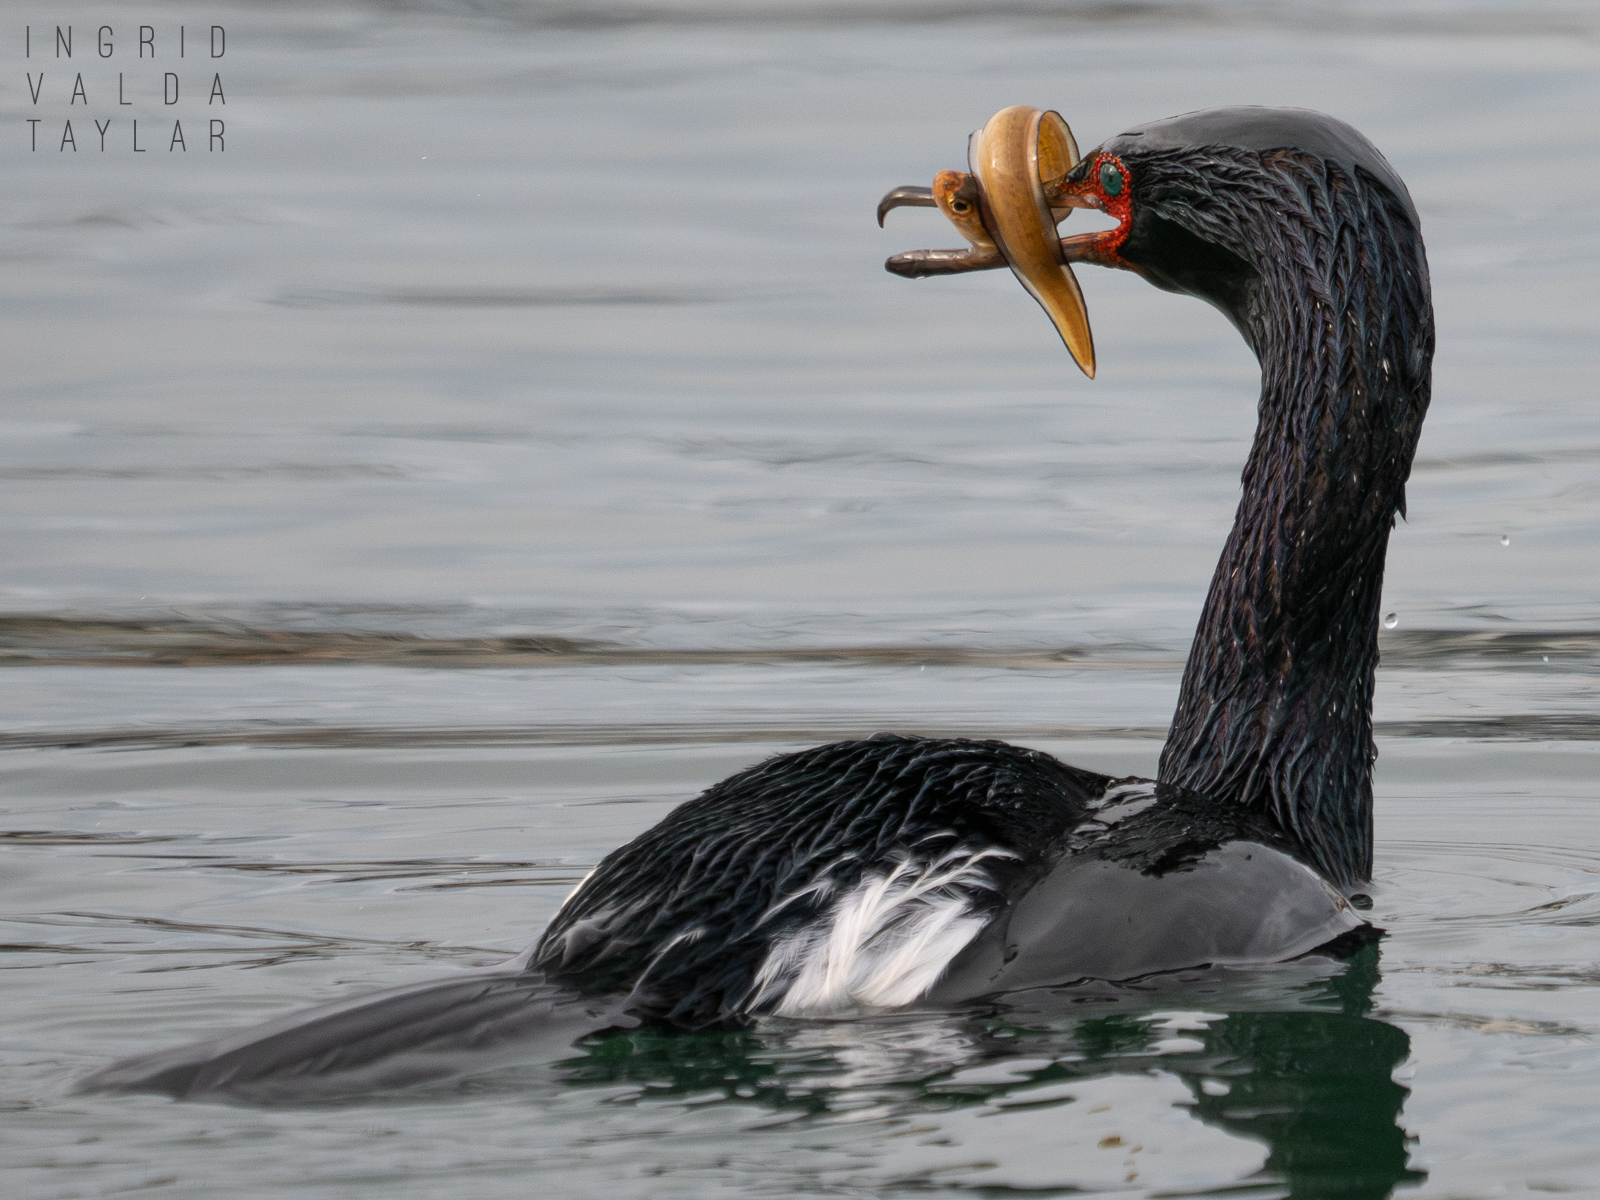 Pelagic Cormorant with Catch